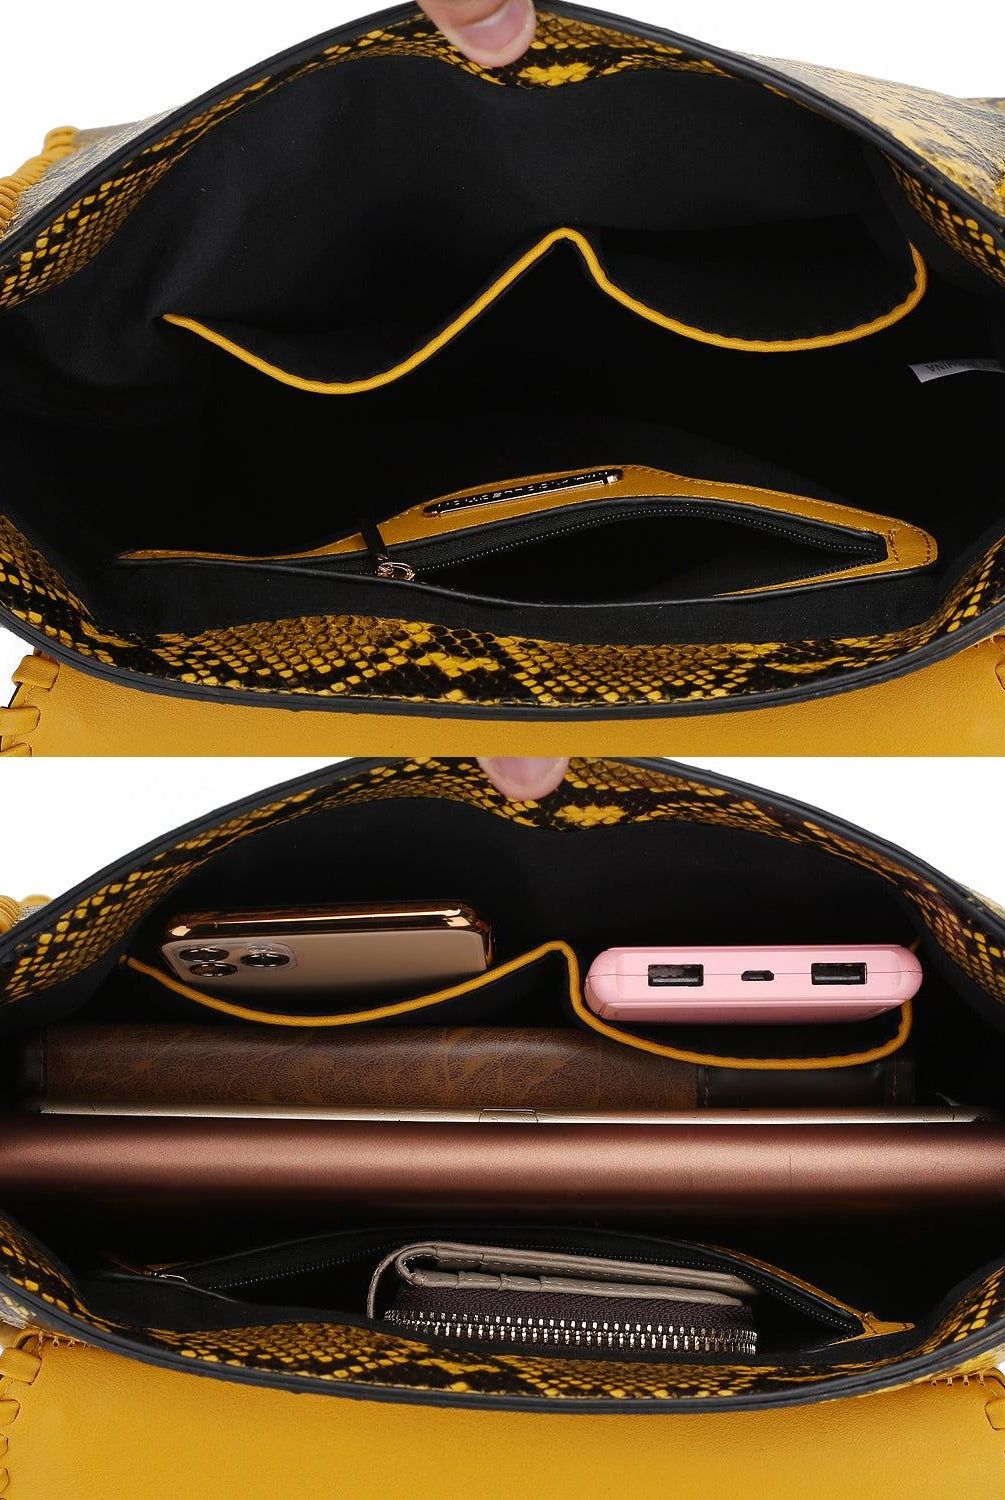 Wallets, Handbags & Accessories Lilli Satchel Handbag Vegan Leather Women